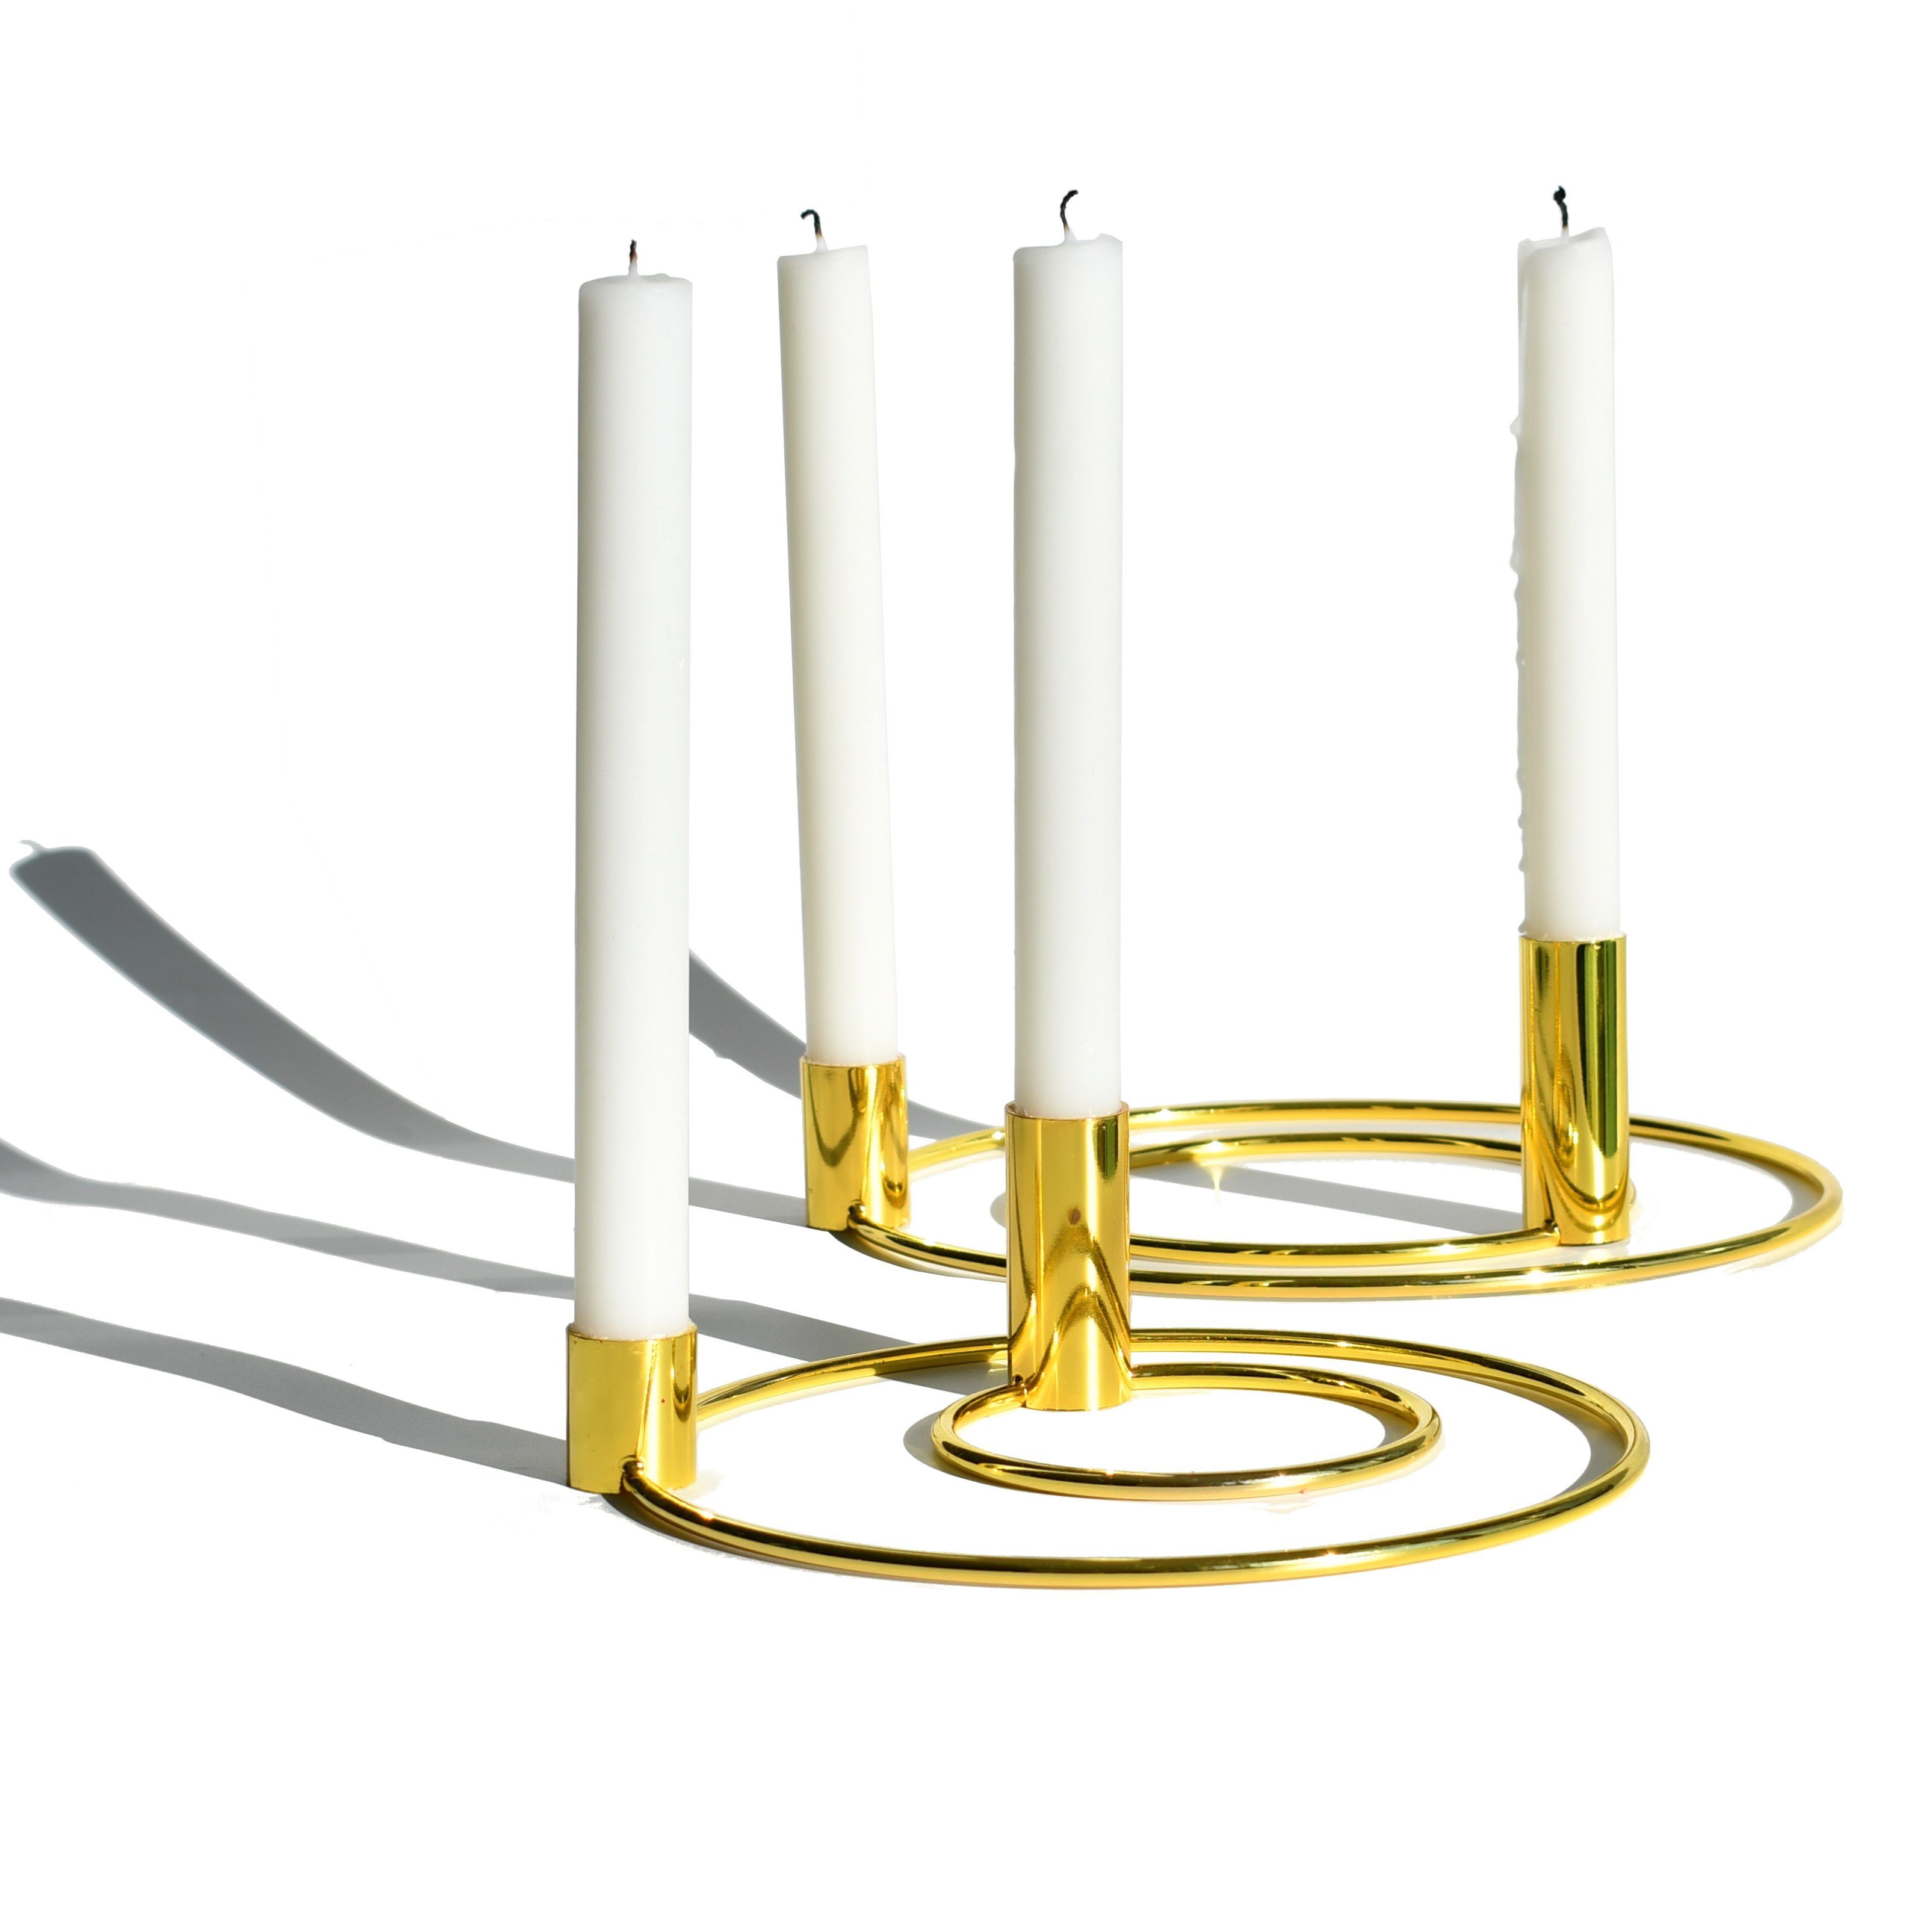 in Kreise St), vier Kerzen Kerzenhalter (4 poliert, Kerzenhalter 4x Gold, Blue inkl. Chilli verschiedene Design elegante Goldfarben, Edelstahl,